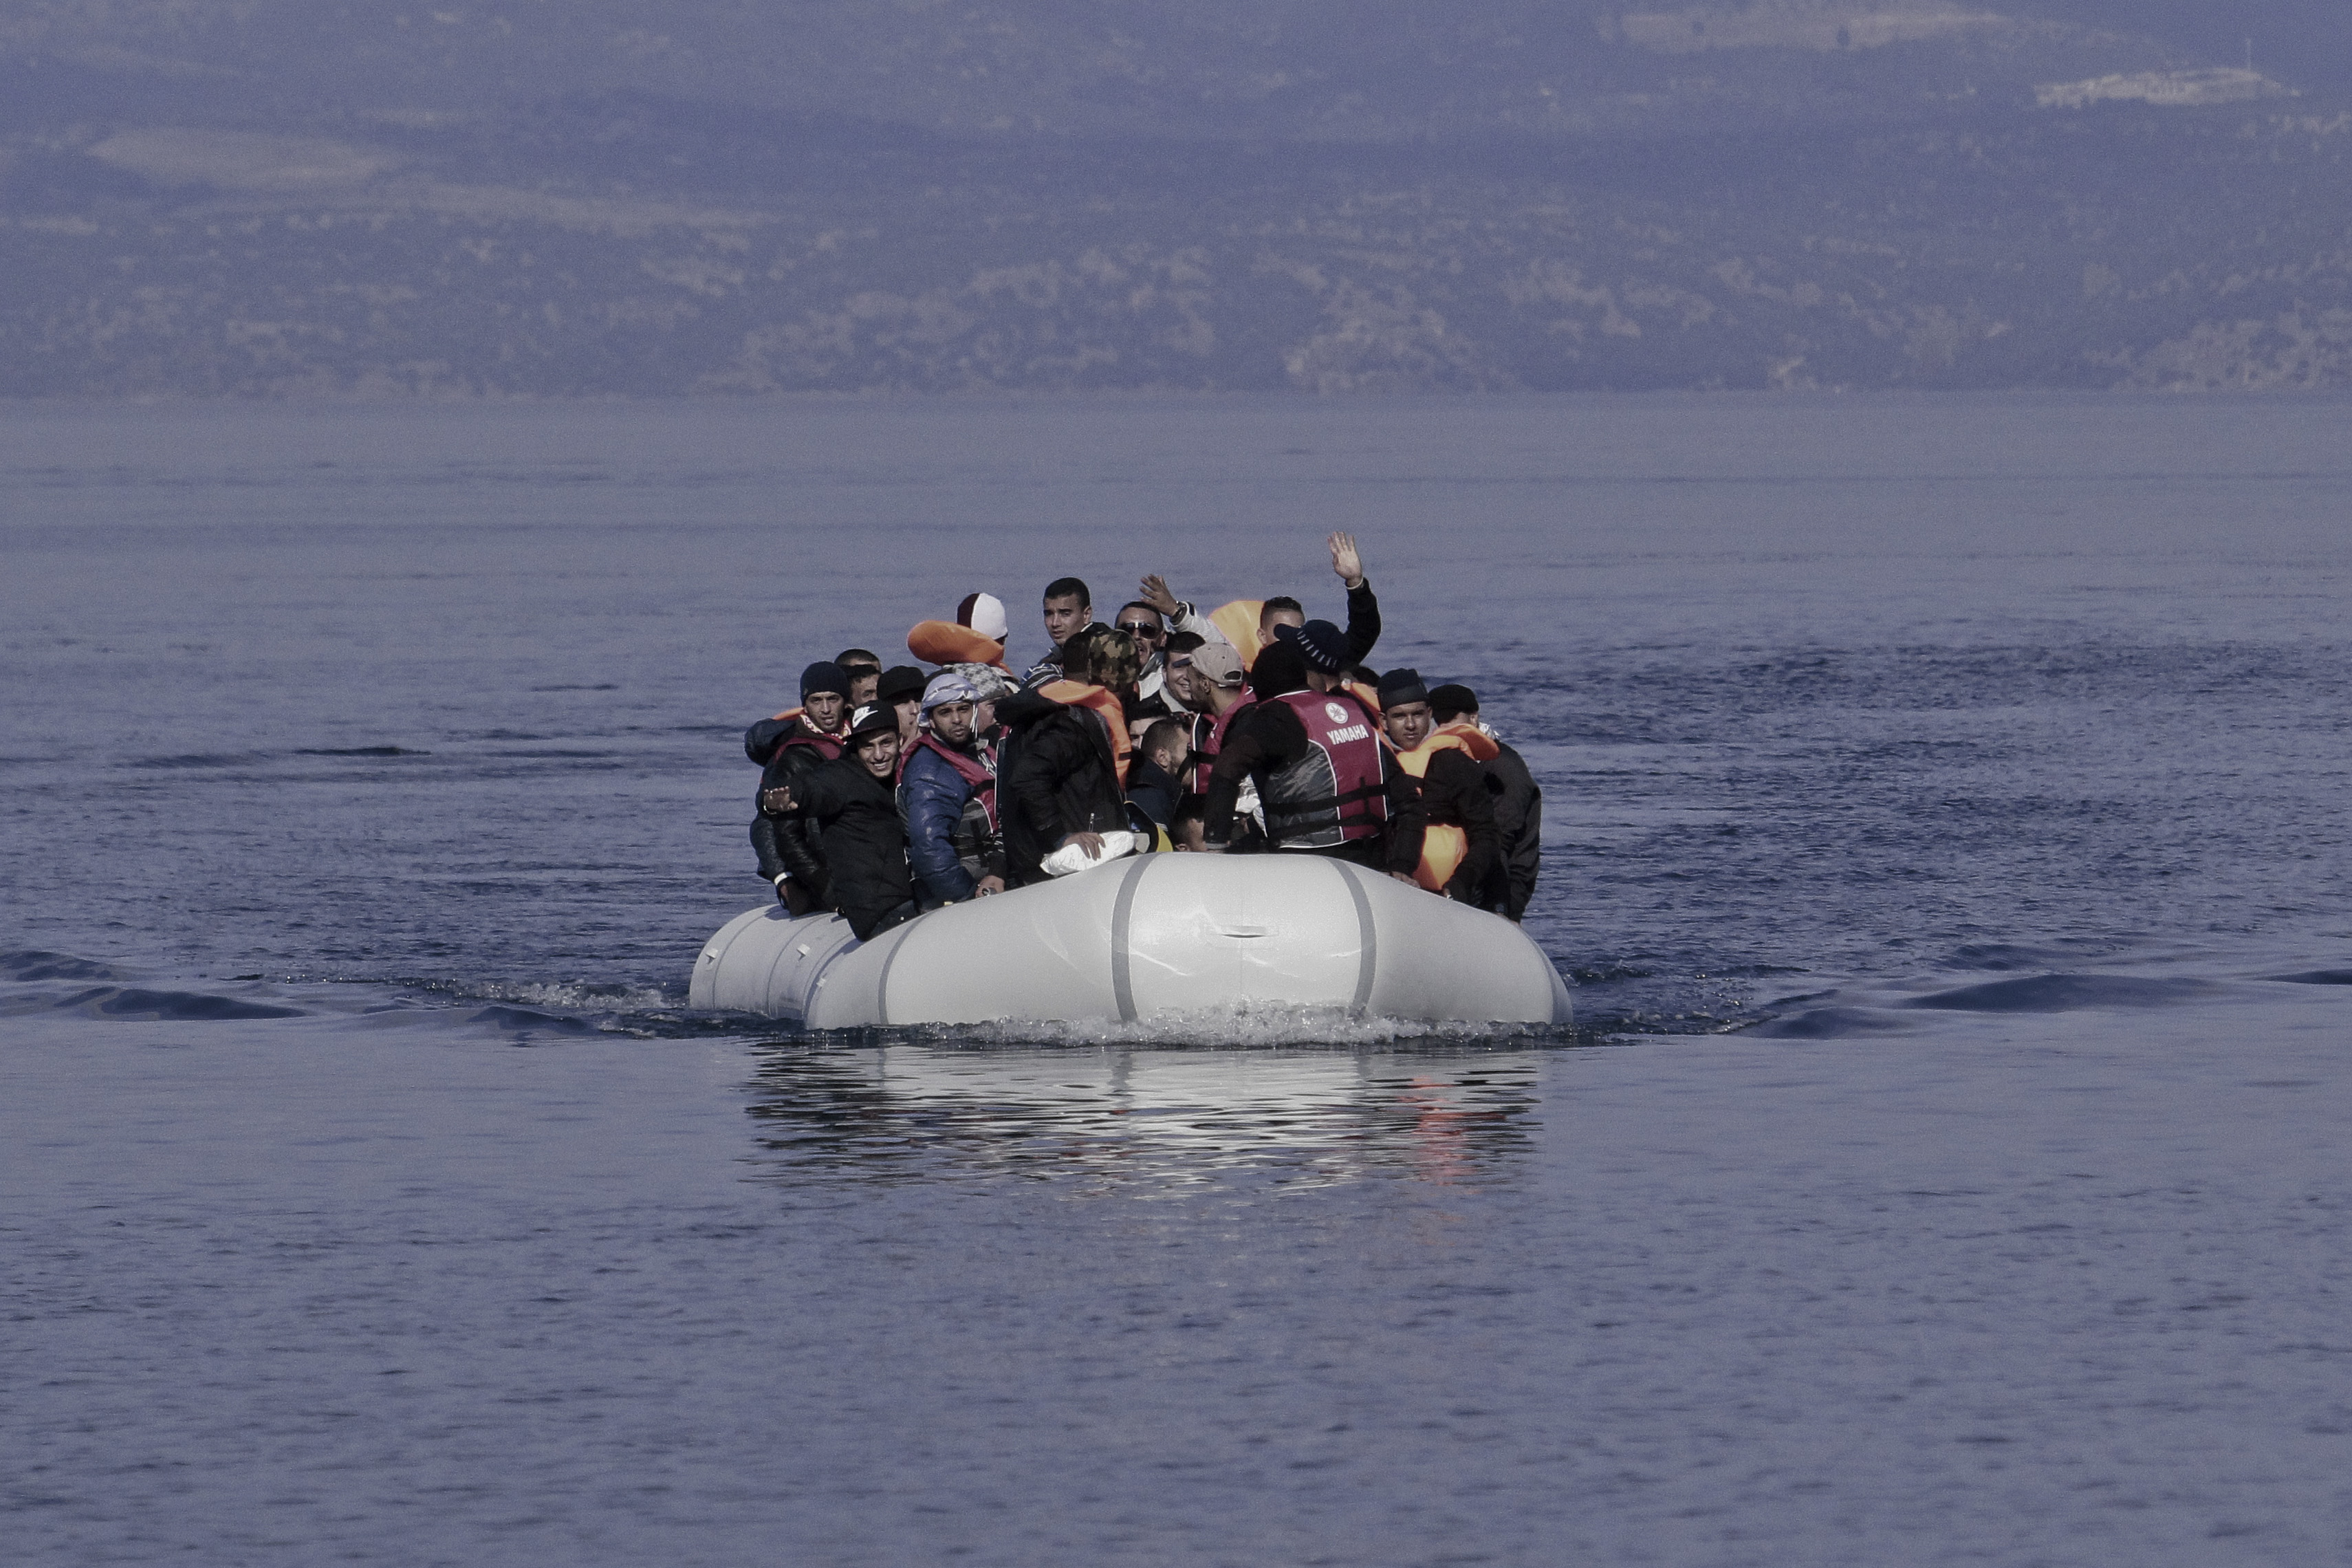 Hurriyet: Χιλιάδες περιμένουν να φτάσουν στα ελληνικά νησιά